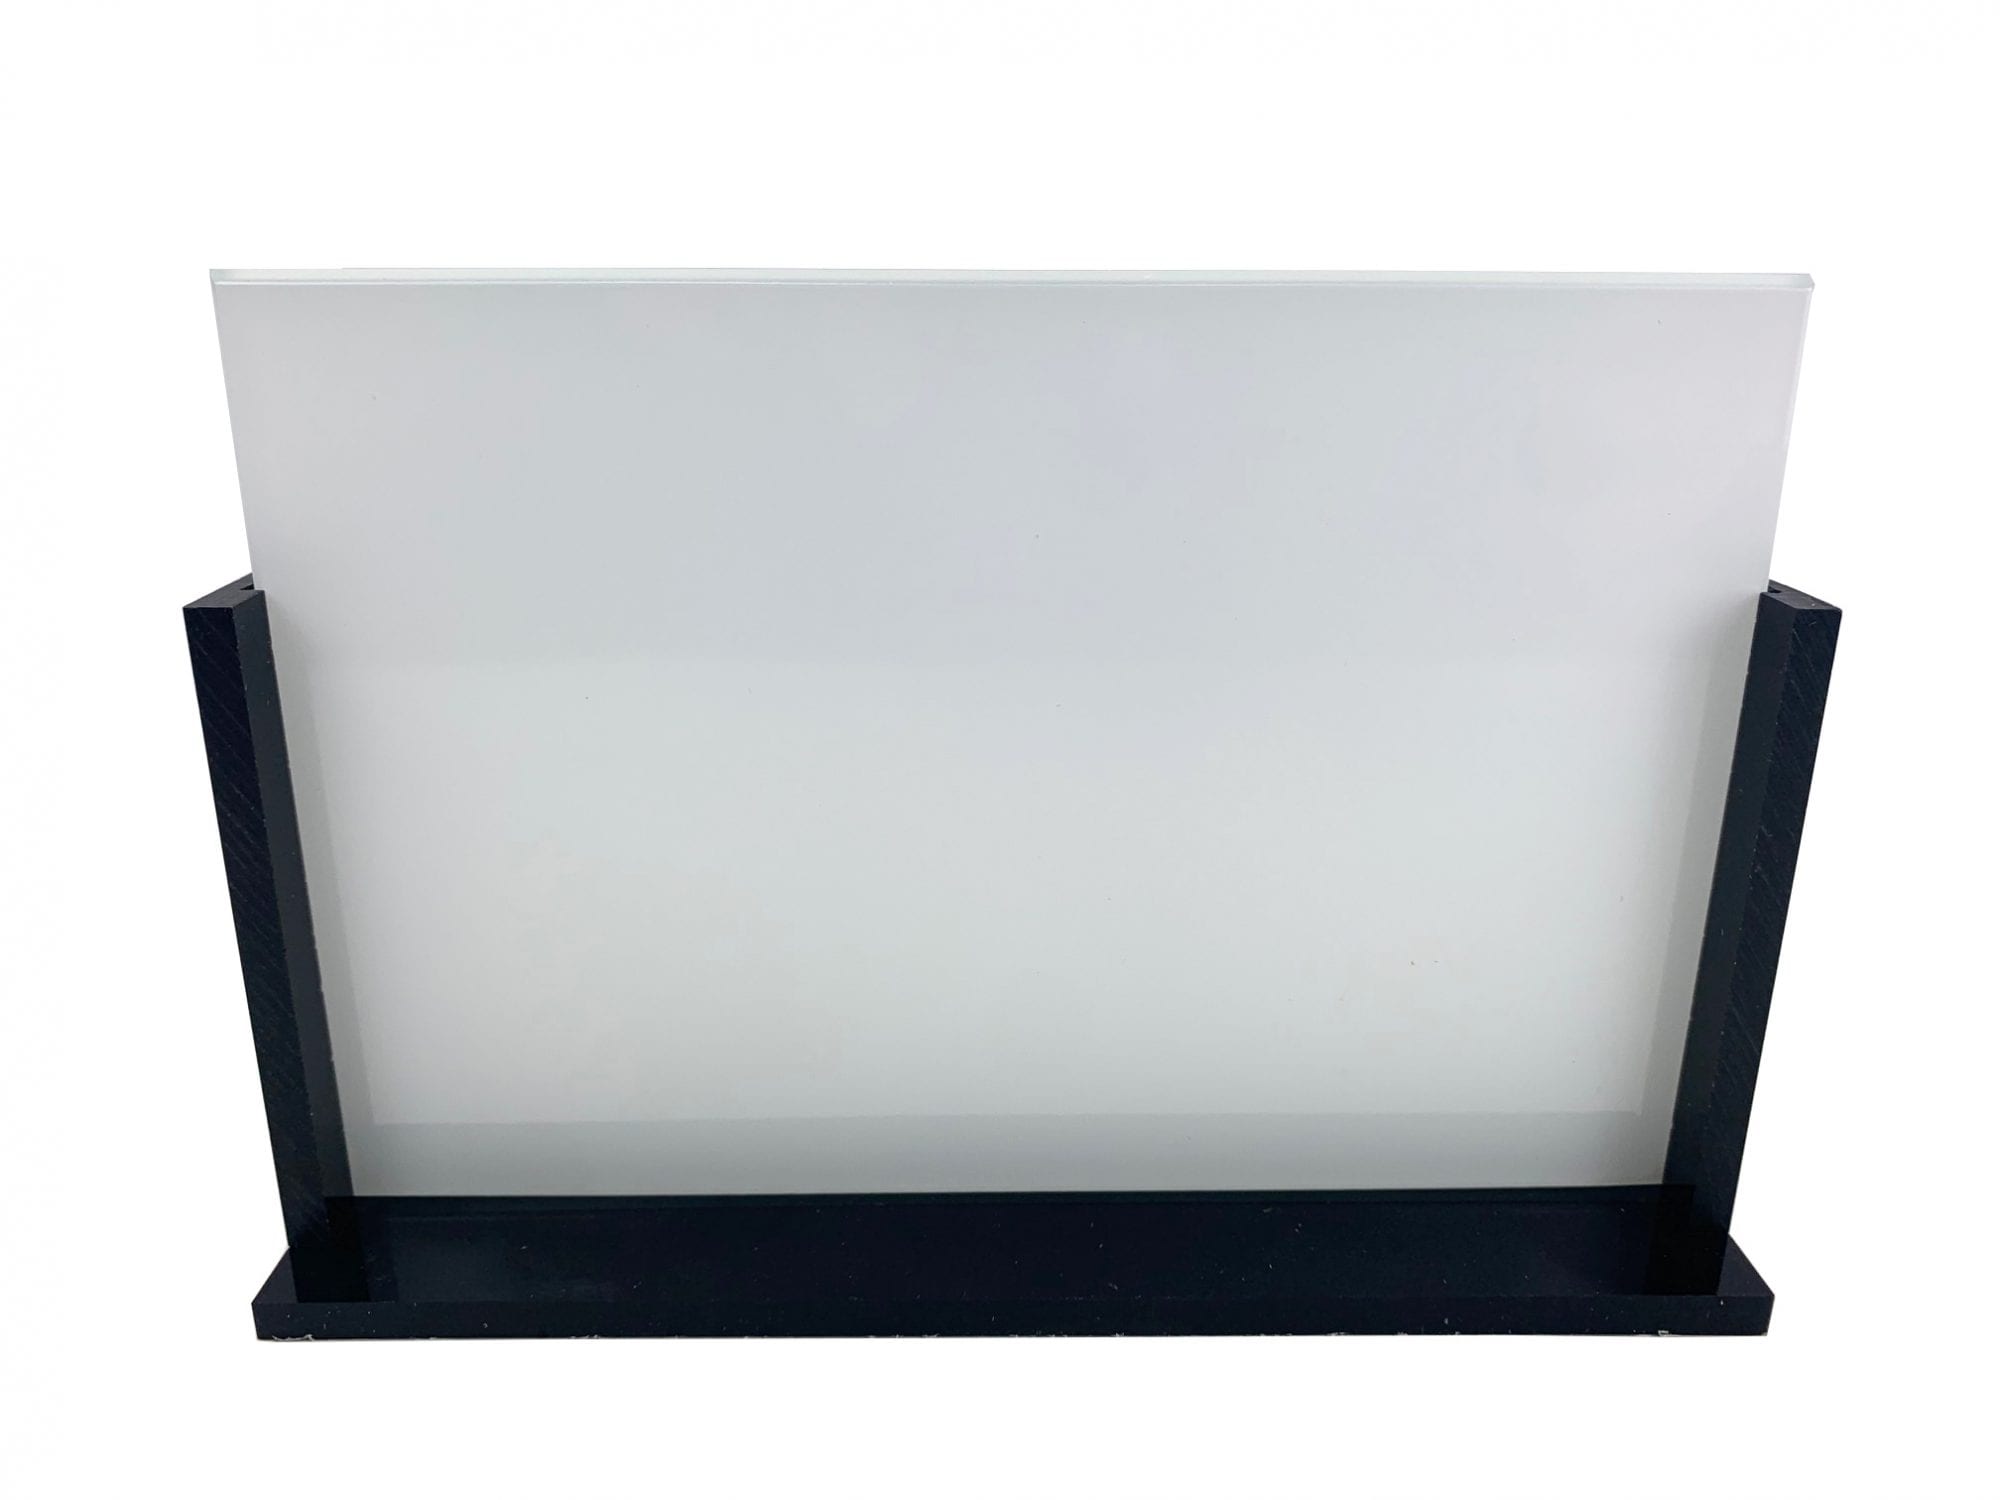 Black For Heat Transfer Press Sublimation Slide Stand Picture Frame 